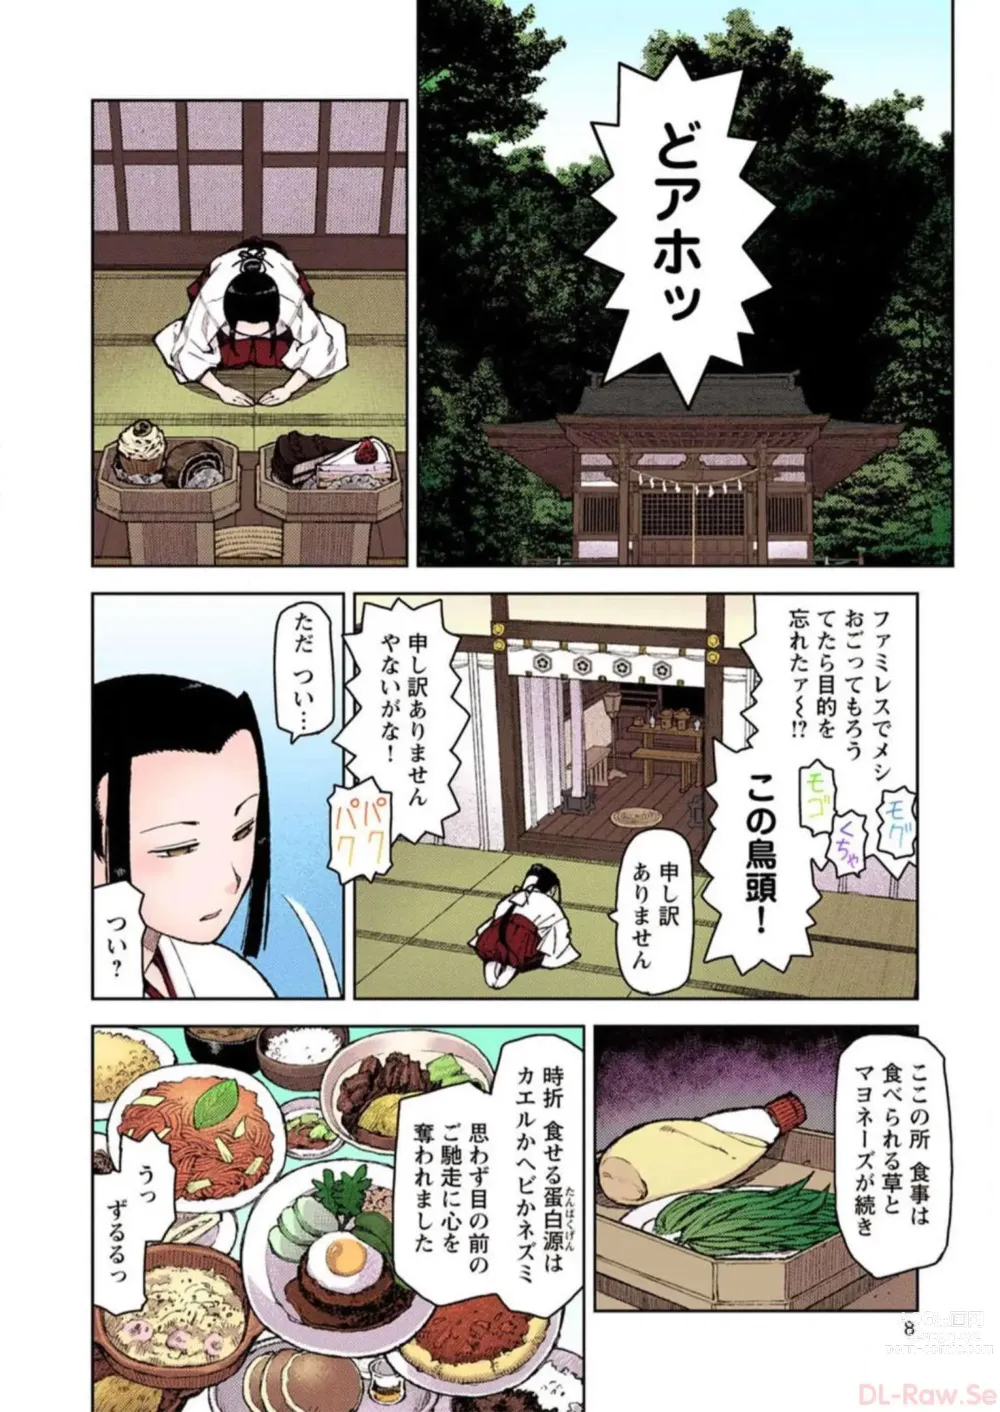 Page 8 of manga Tsugumomo Digital Colored Comics V2